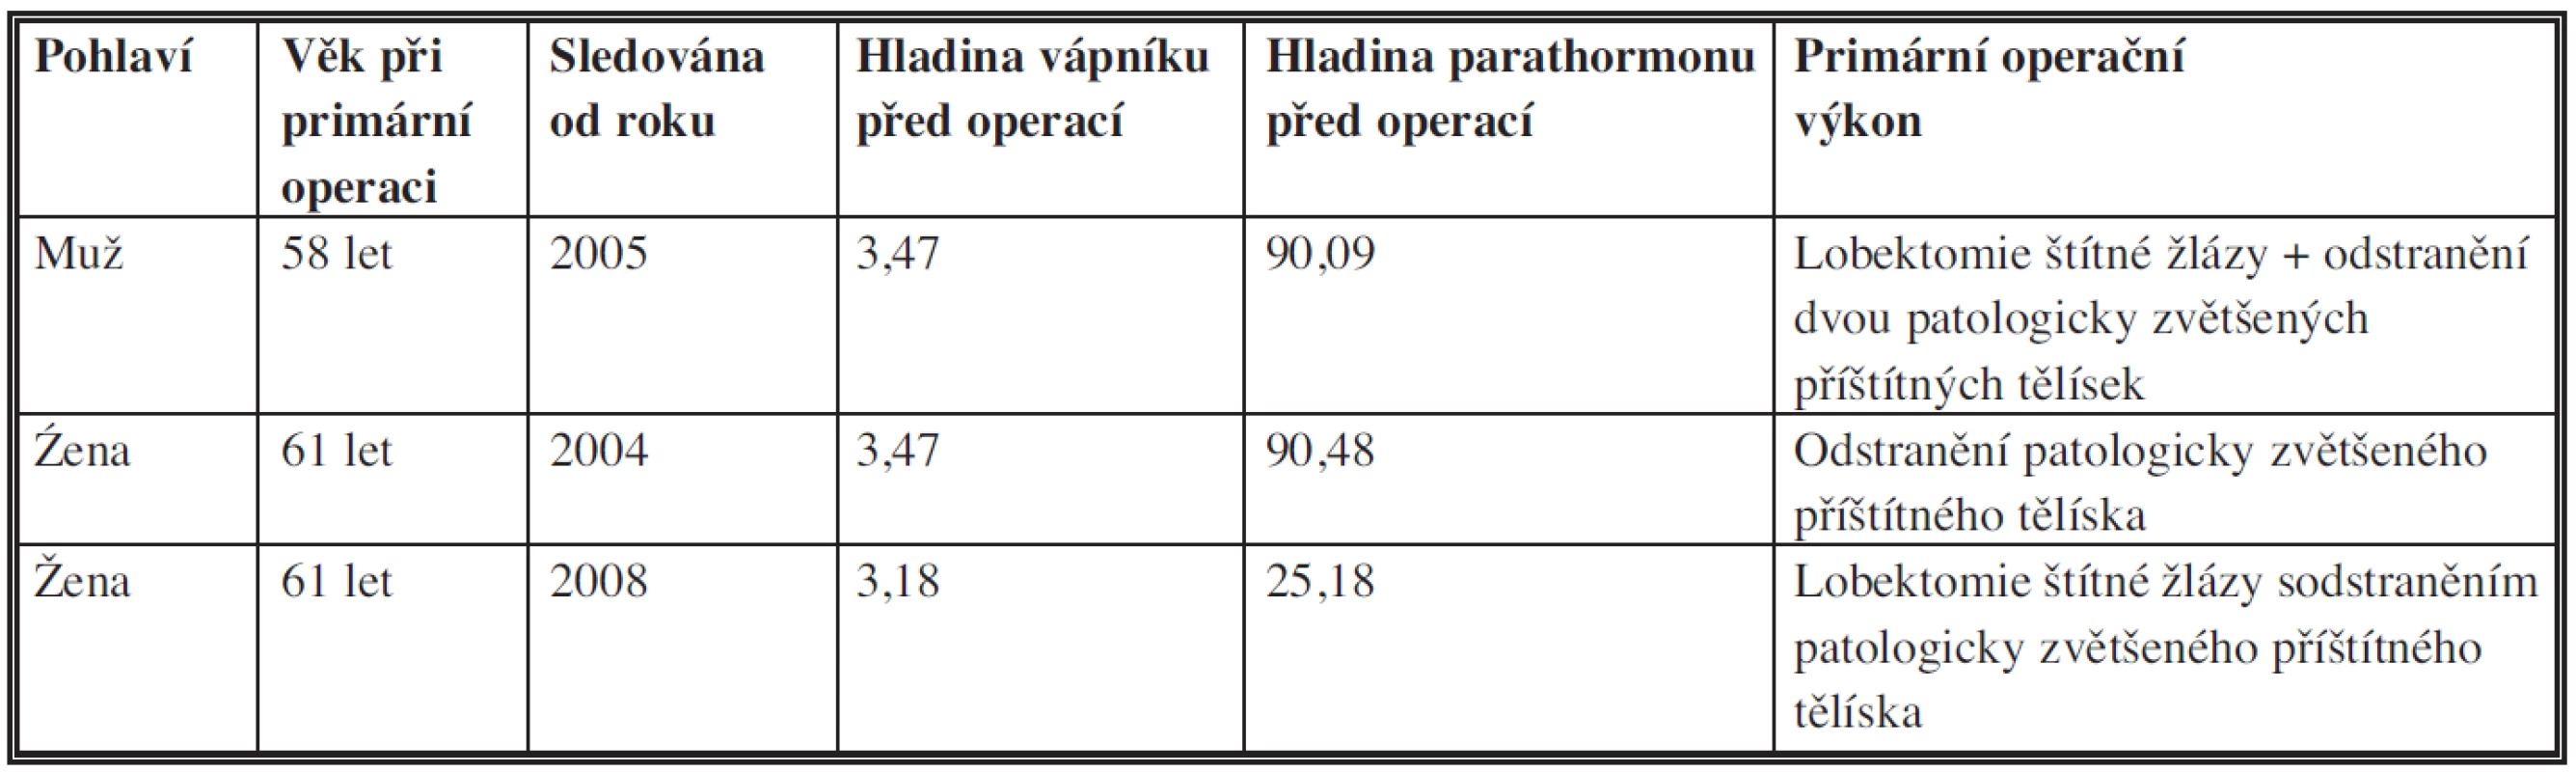 Základní údaje o pacientech s diagnózou karcinomu paratyroidey
Tab. 1: Basic data on patients with the diagnosis of parathyroid carcinoma